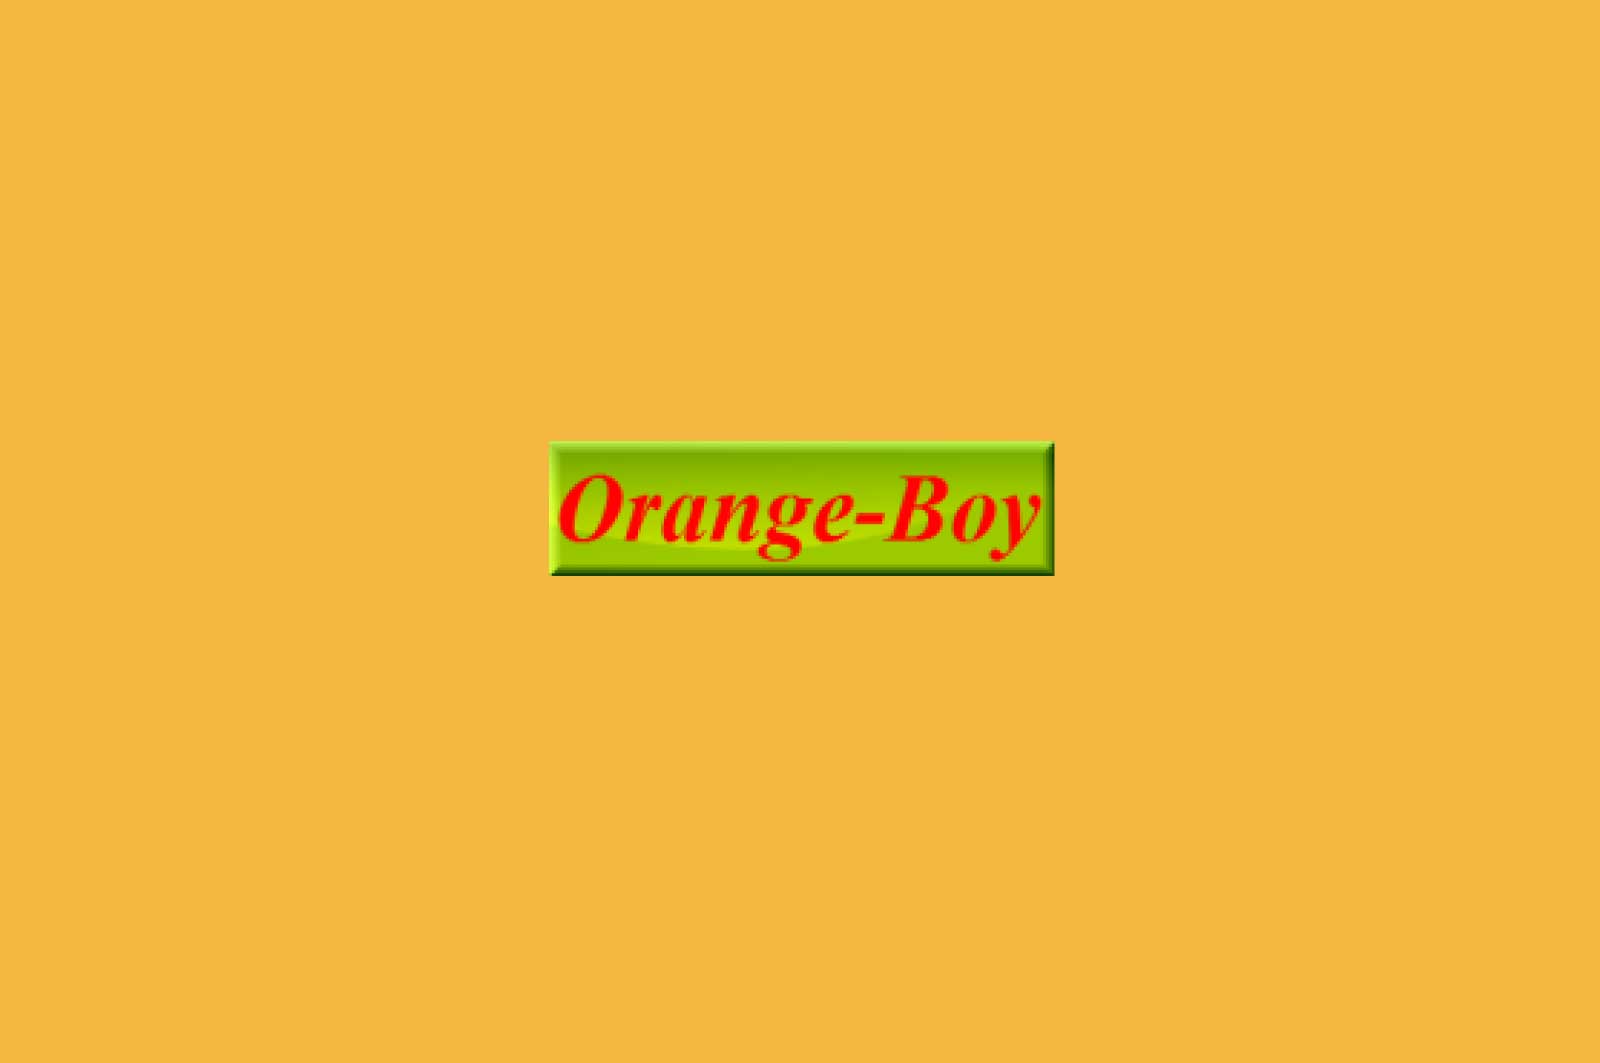 ORANGE-BOY